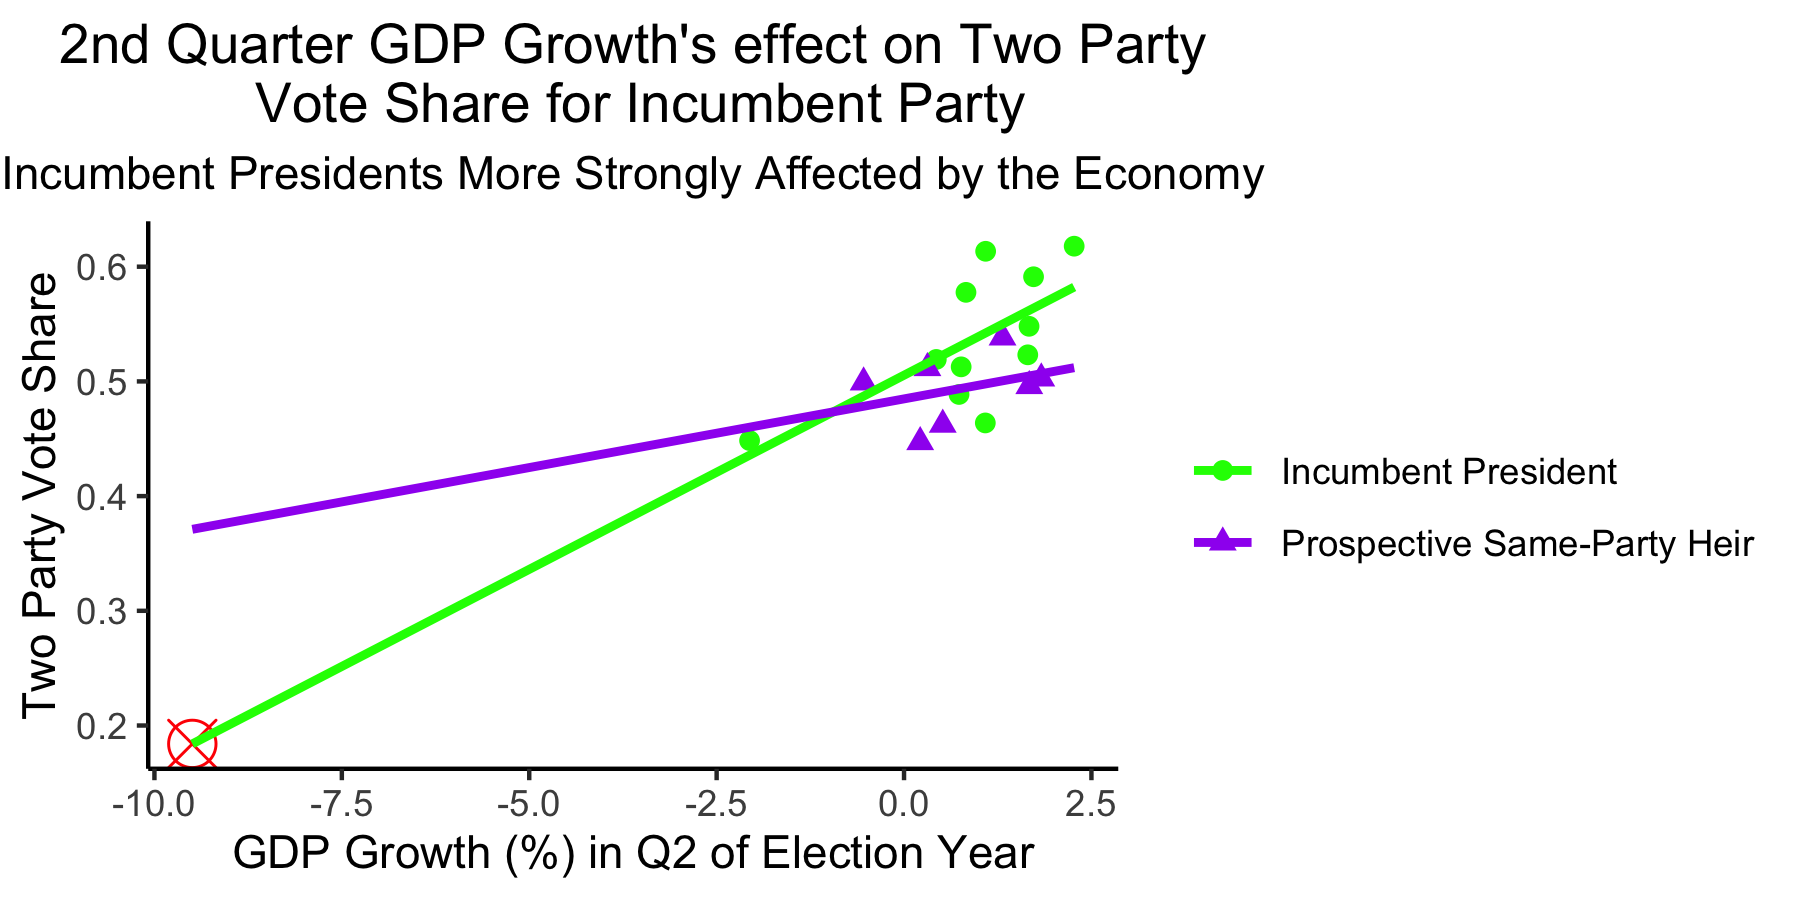 Q2 GDP Growth Model